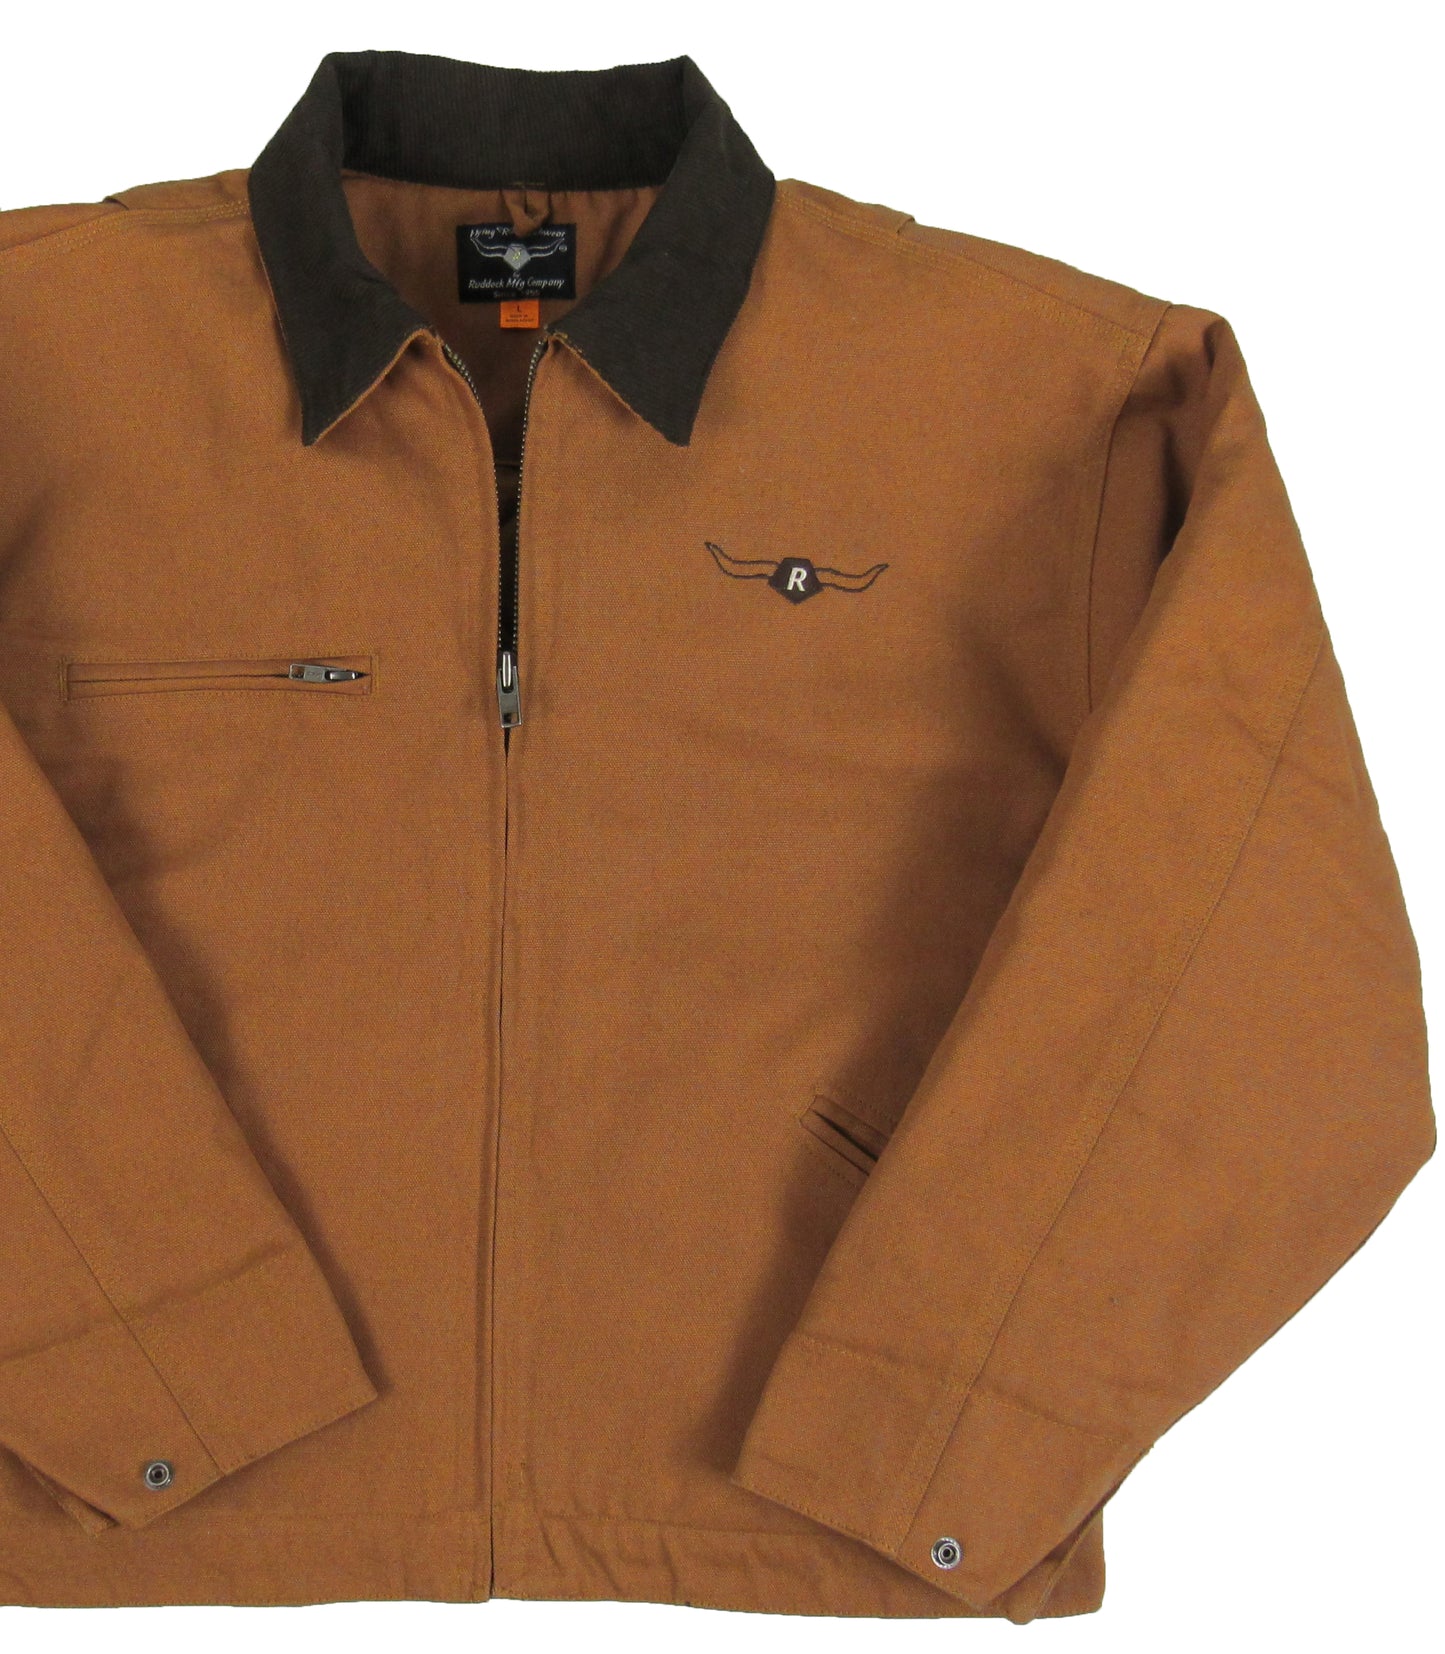 prairie canvas jacket by Flying R Ranchwear in brown canvas